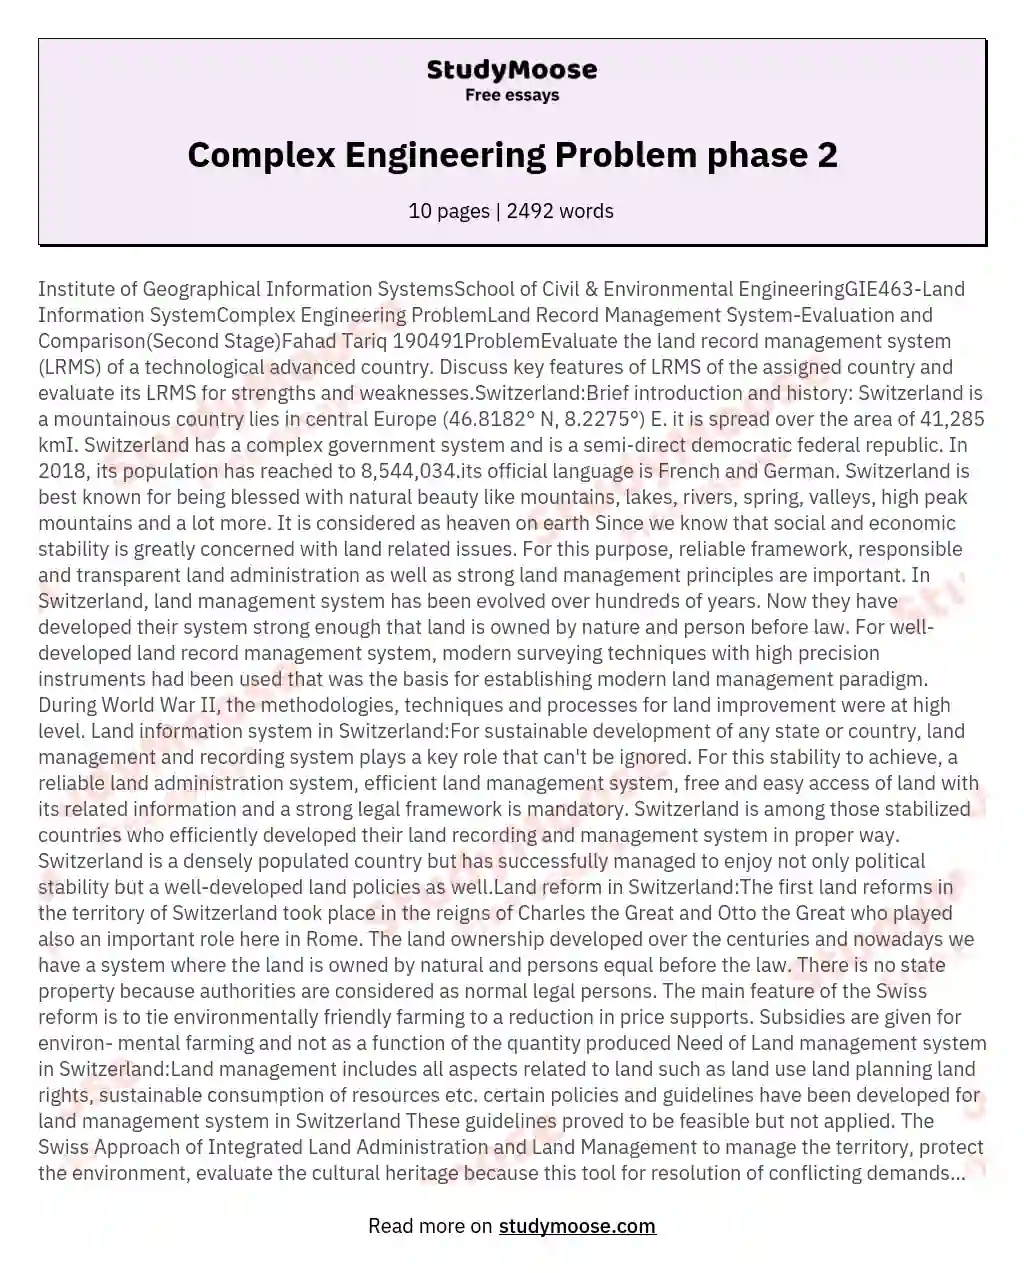 Complex Engineering Problem phase 2 essay